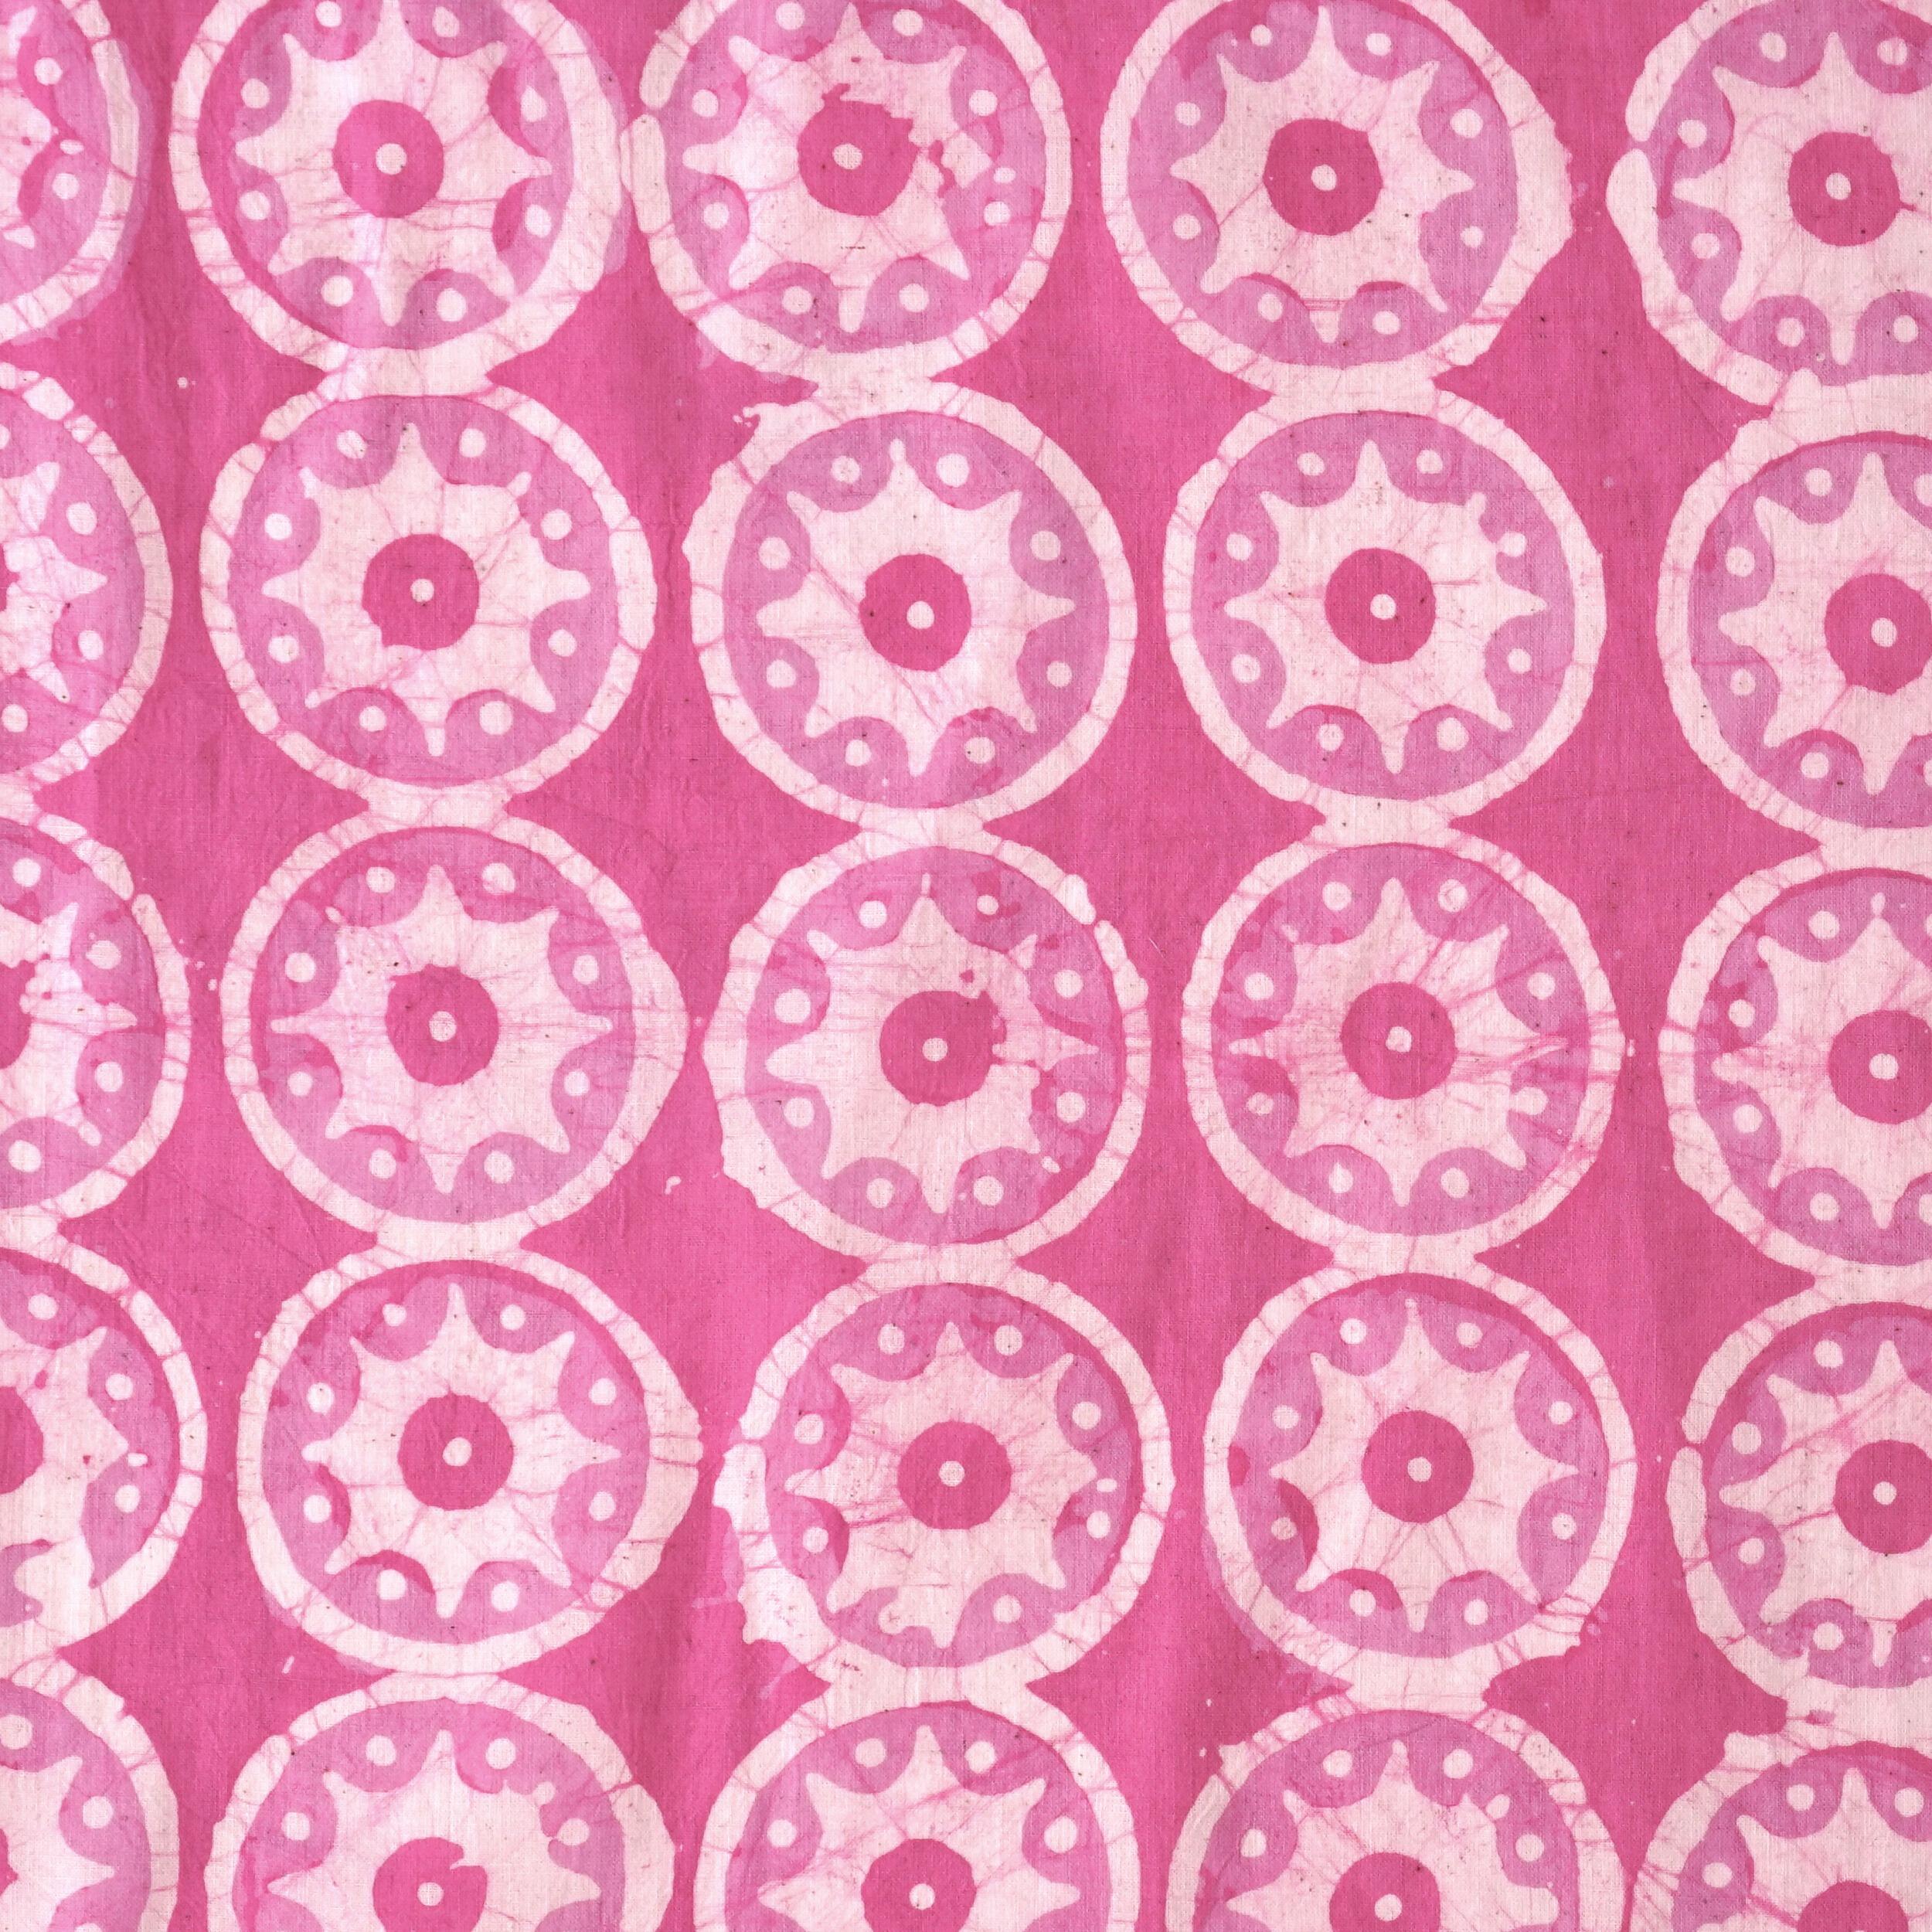 100% Block-Printed Batik Cotton Fabric From India - Pink Reactive Dye - Lollipop - Flat